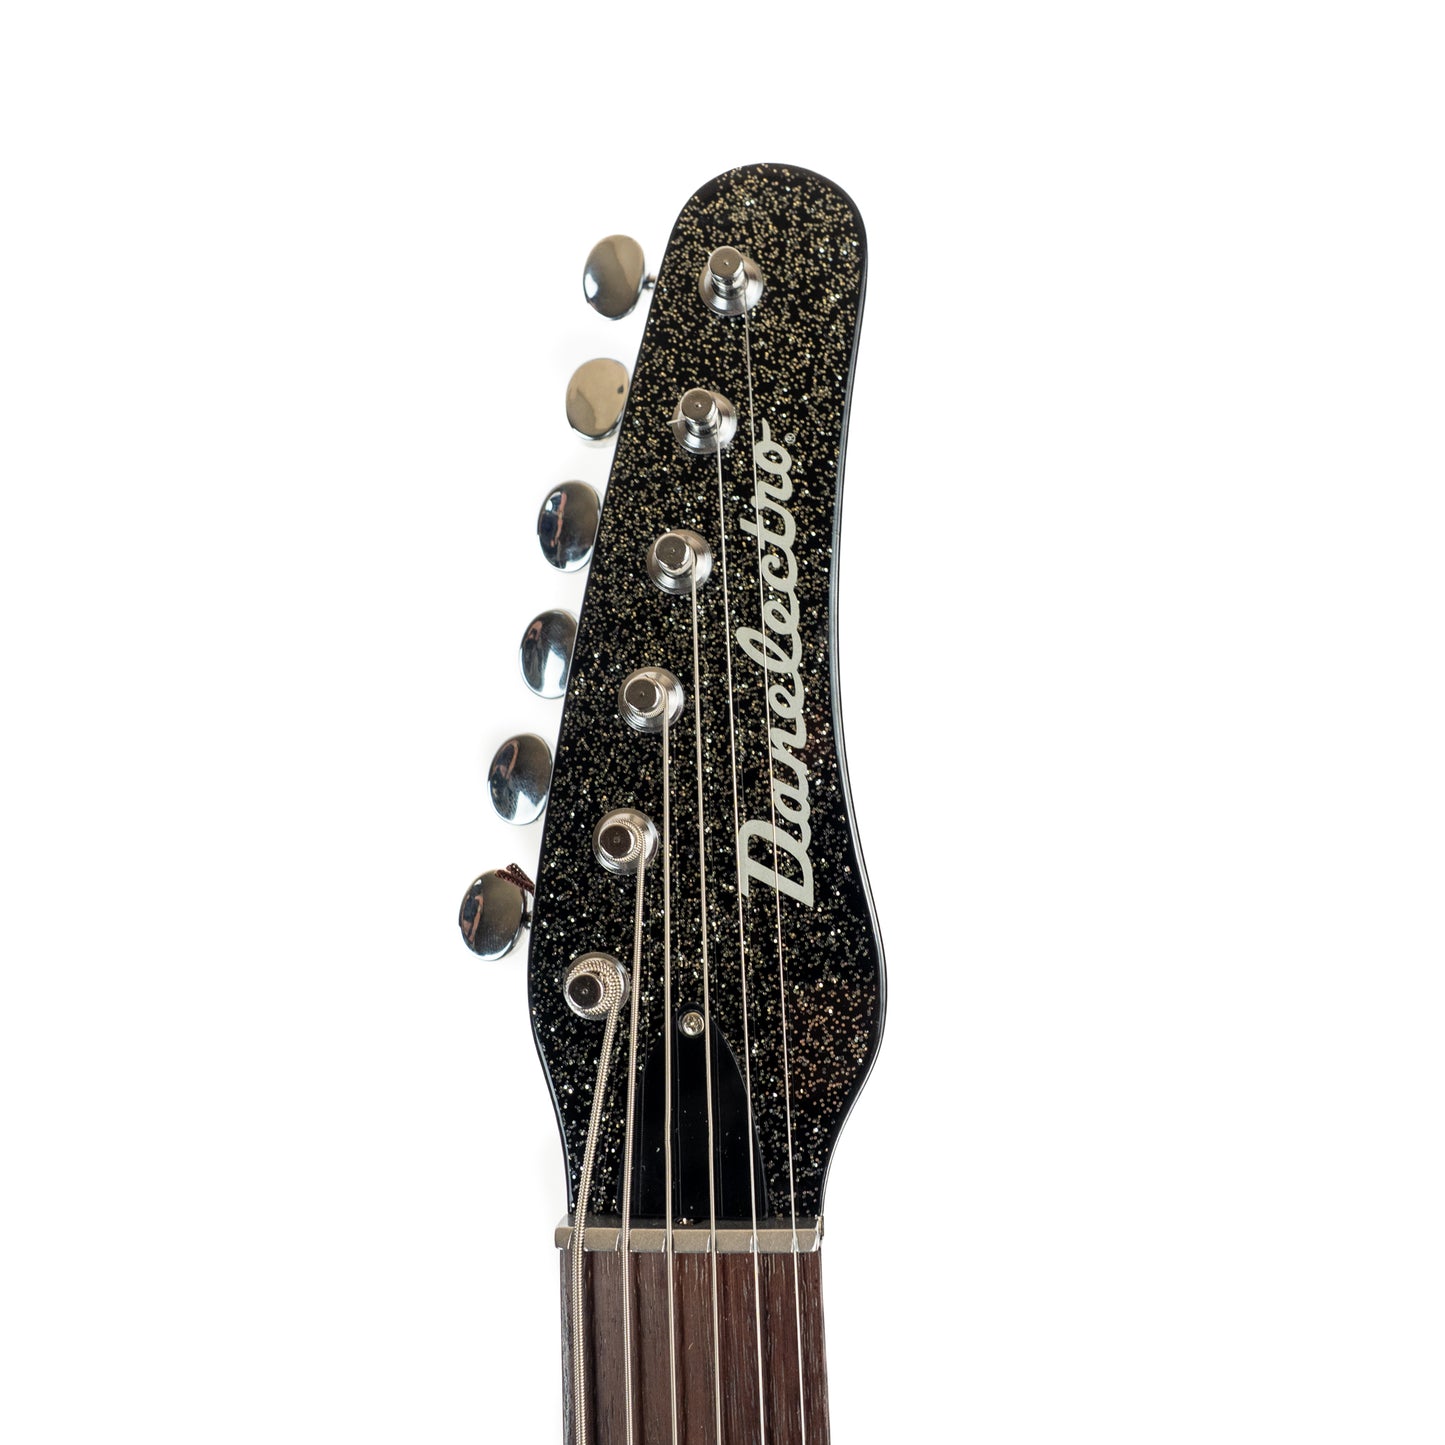 Danelectro 56 Baritone Black Metalflake electric guitar 6lbs, 11 ounces D56BAR